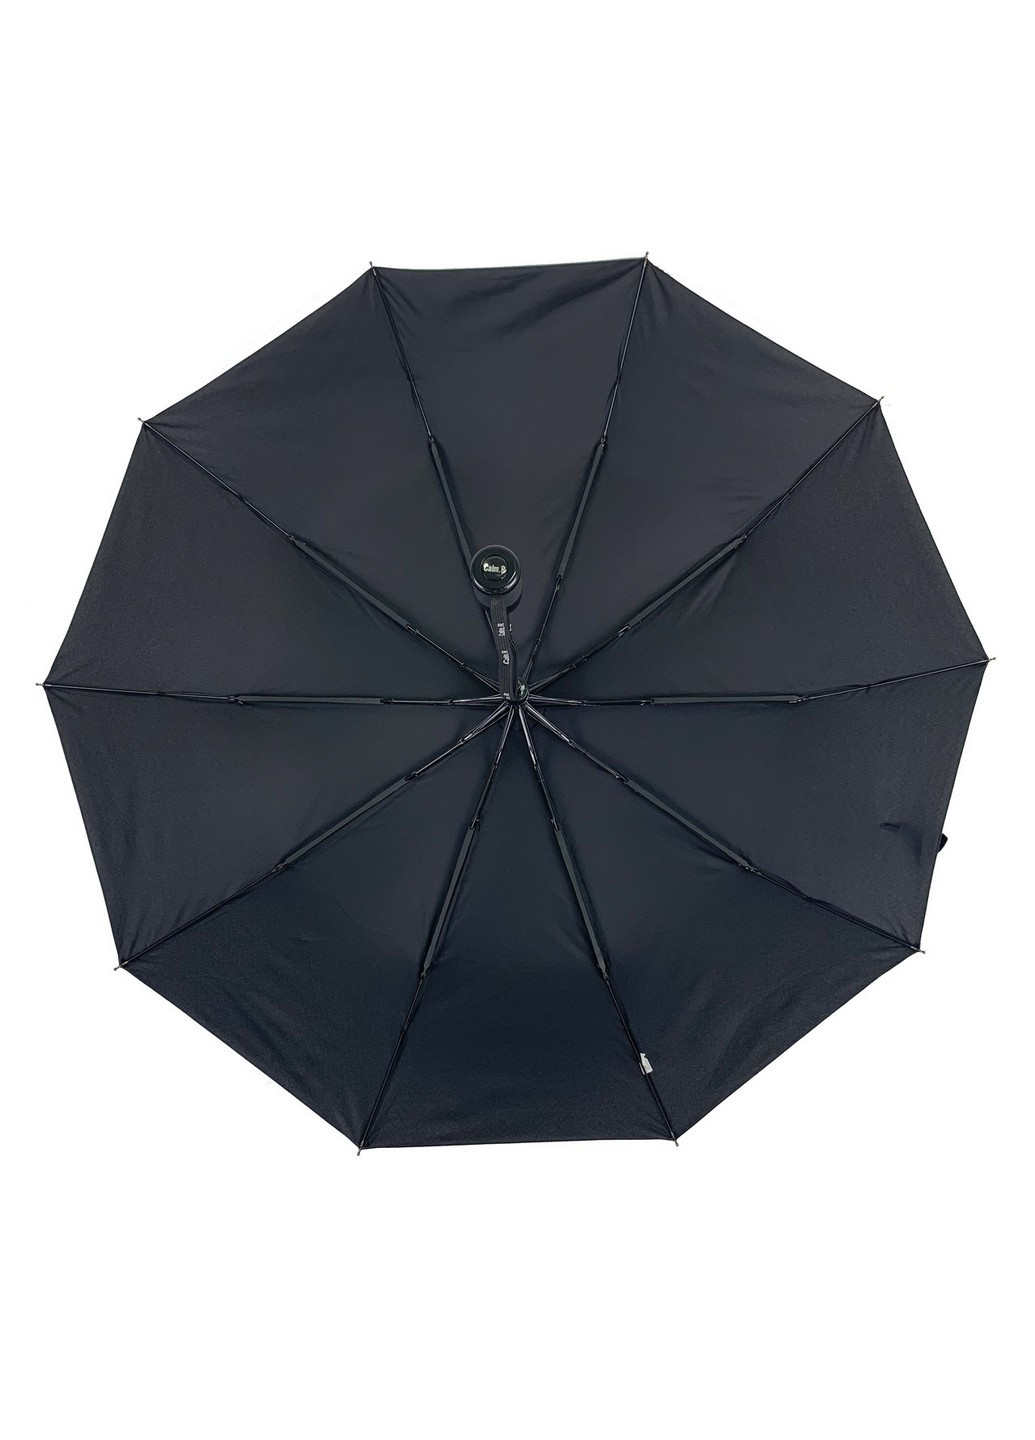 Мужской зонт полуавтомат 100 см Calm Rain (259206192)